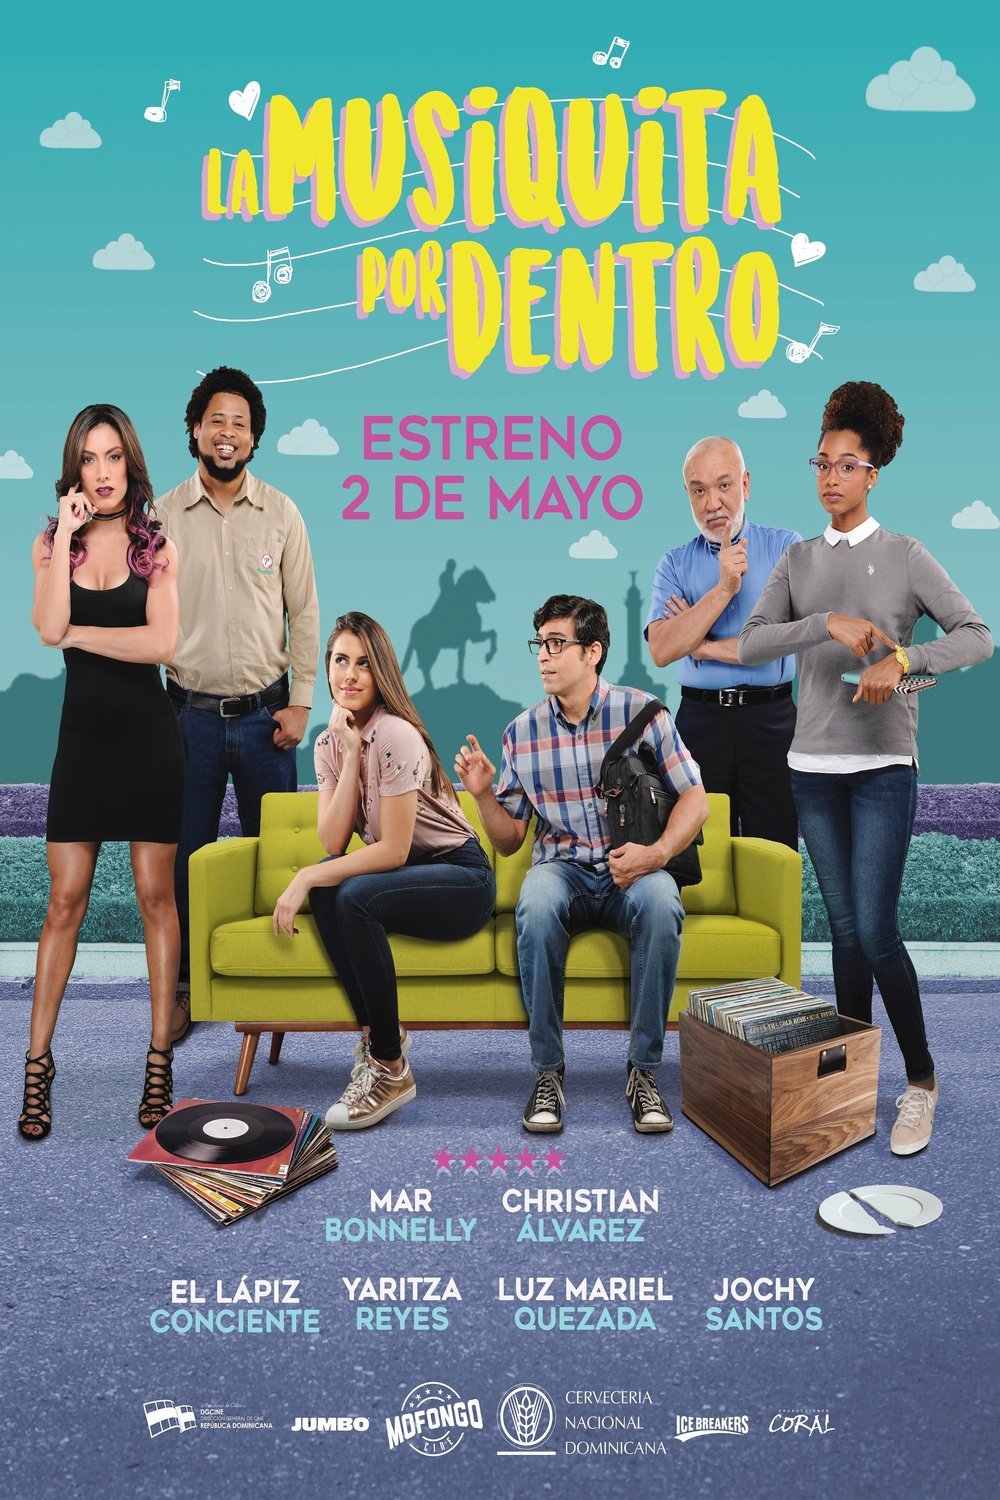 L'affiche originale du film La Musiquita por Dentro en espagnol